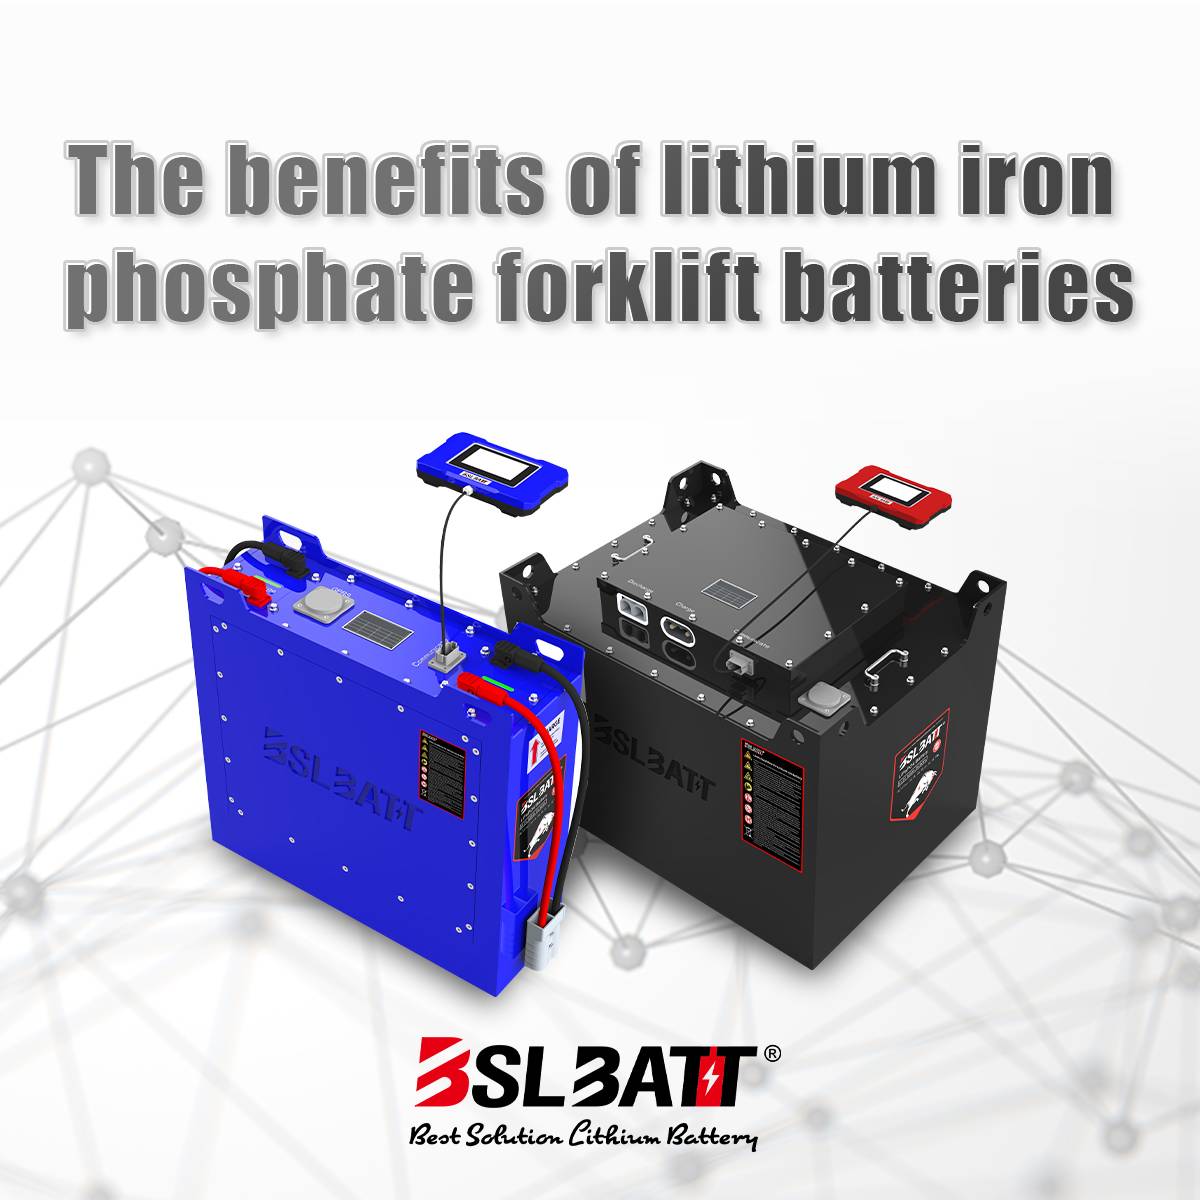 The benefits of lithium iron phosphate forklift batteries | BSLBATT